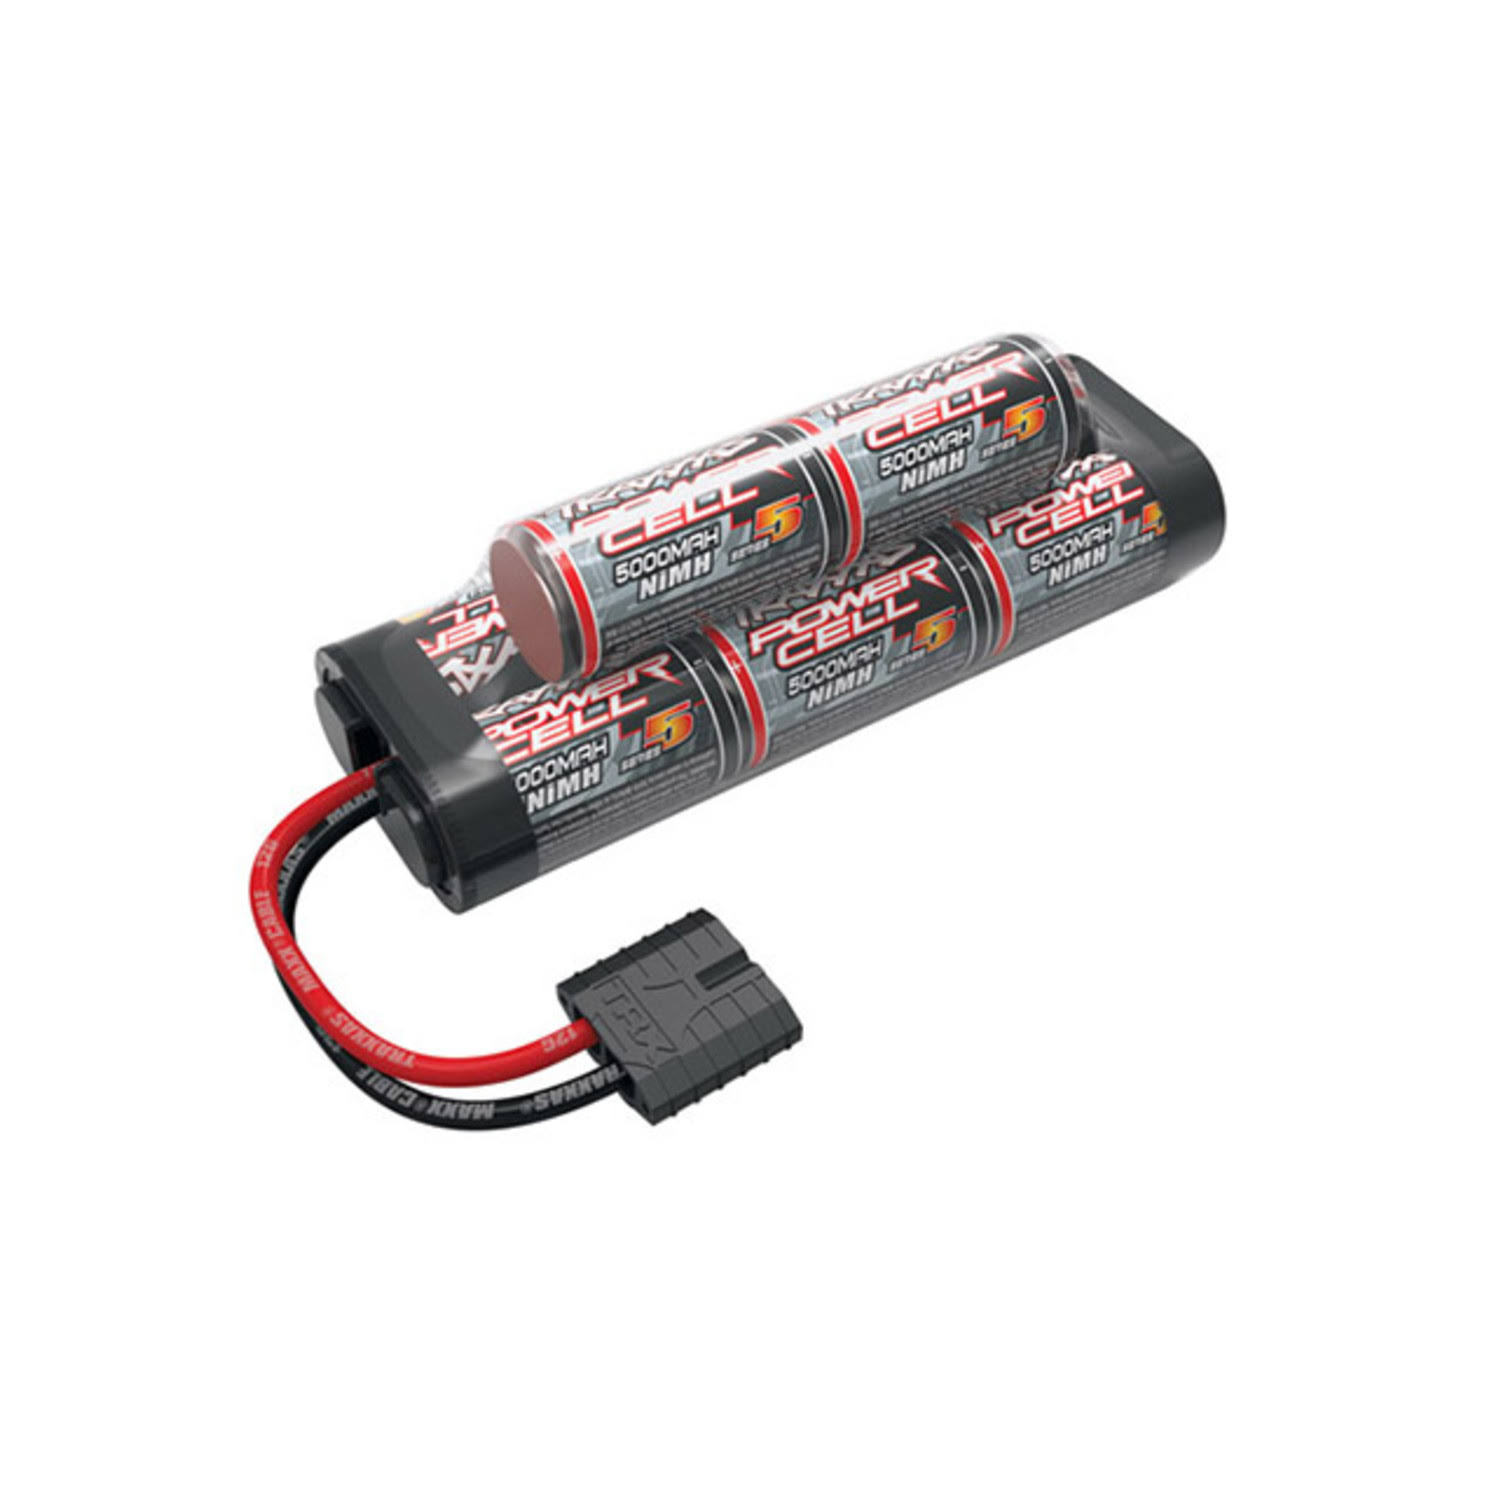 Traxxas Battery Series 5 Power Cell ID - 5000mah